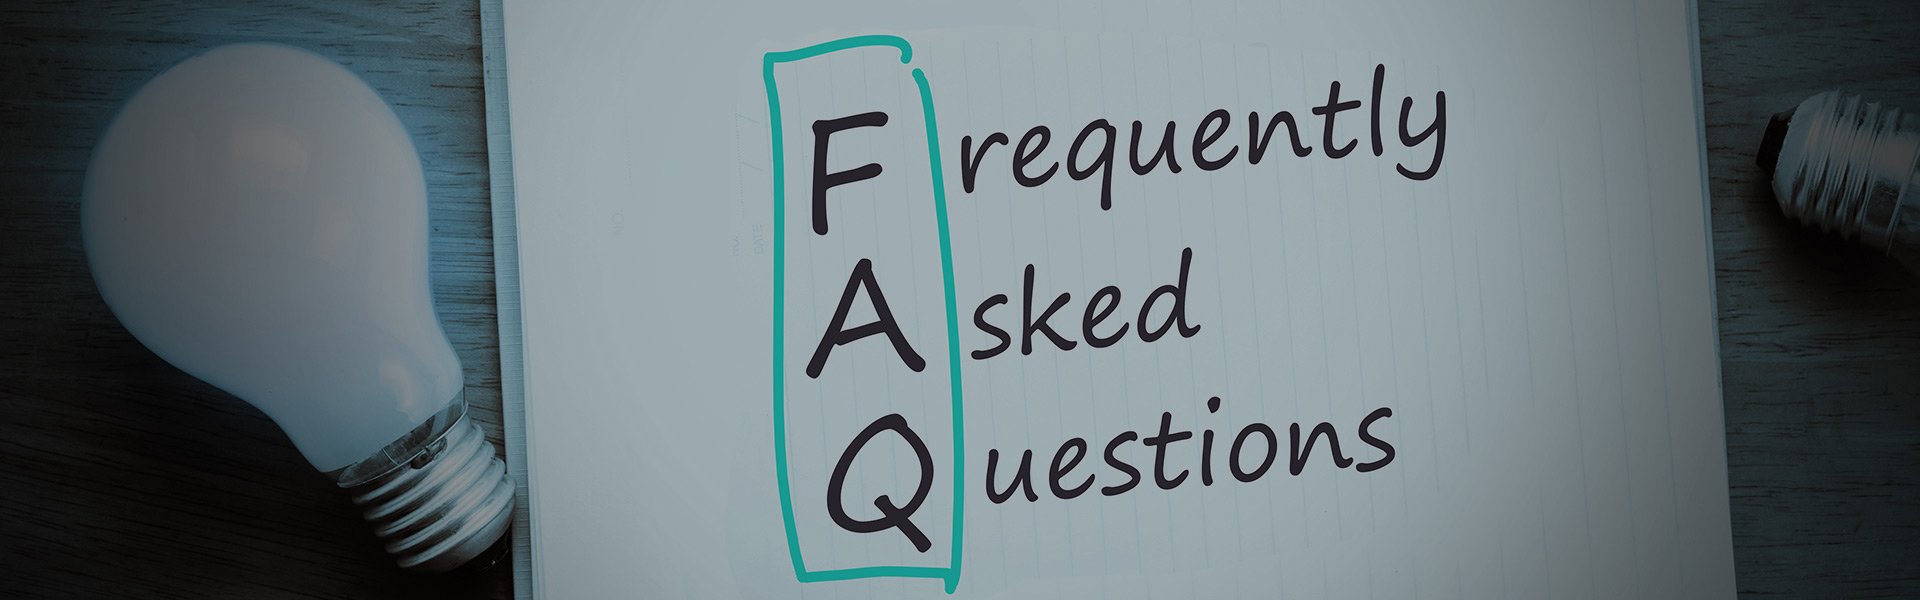 FAQ banner